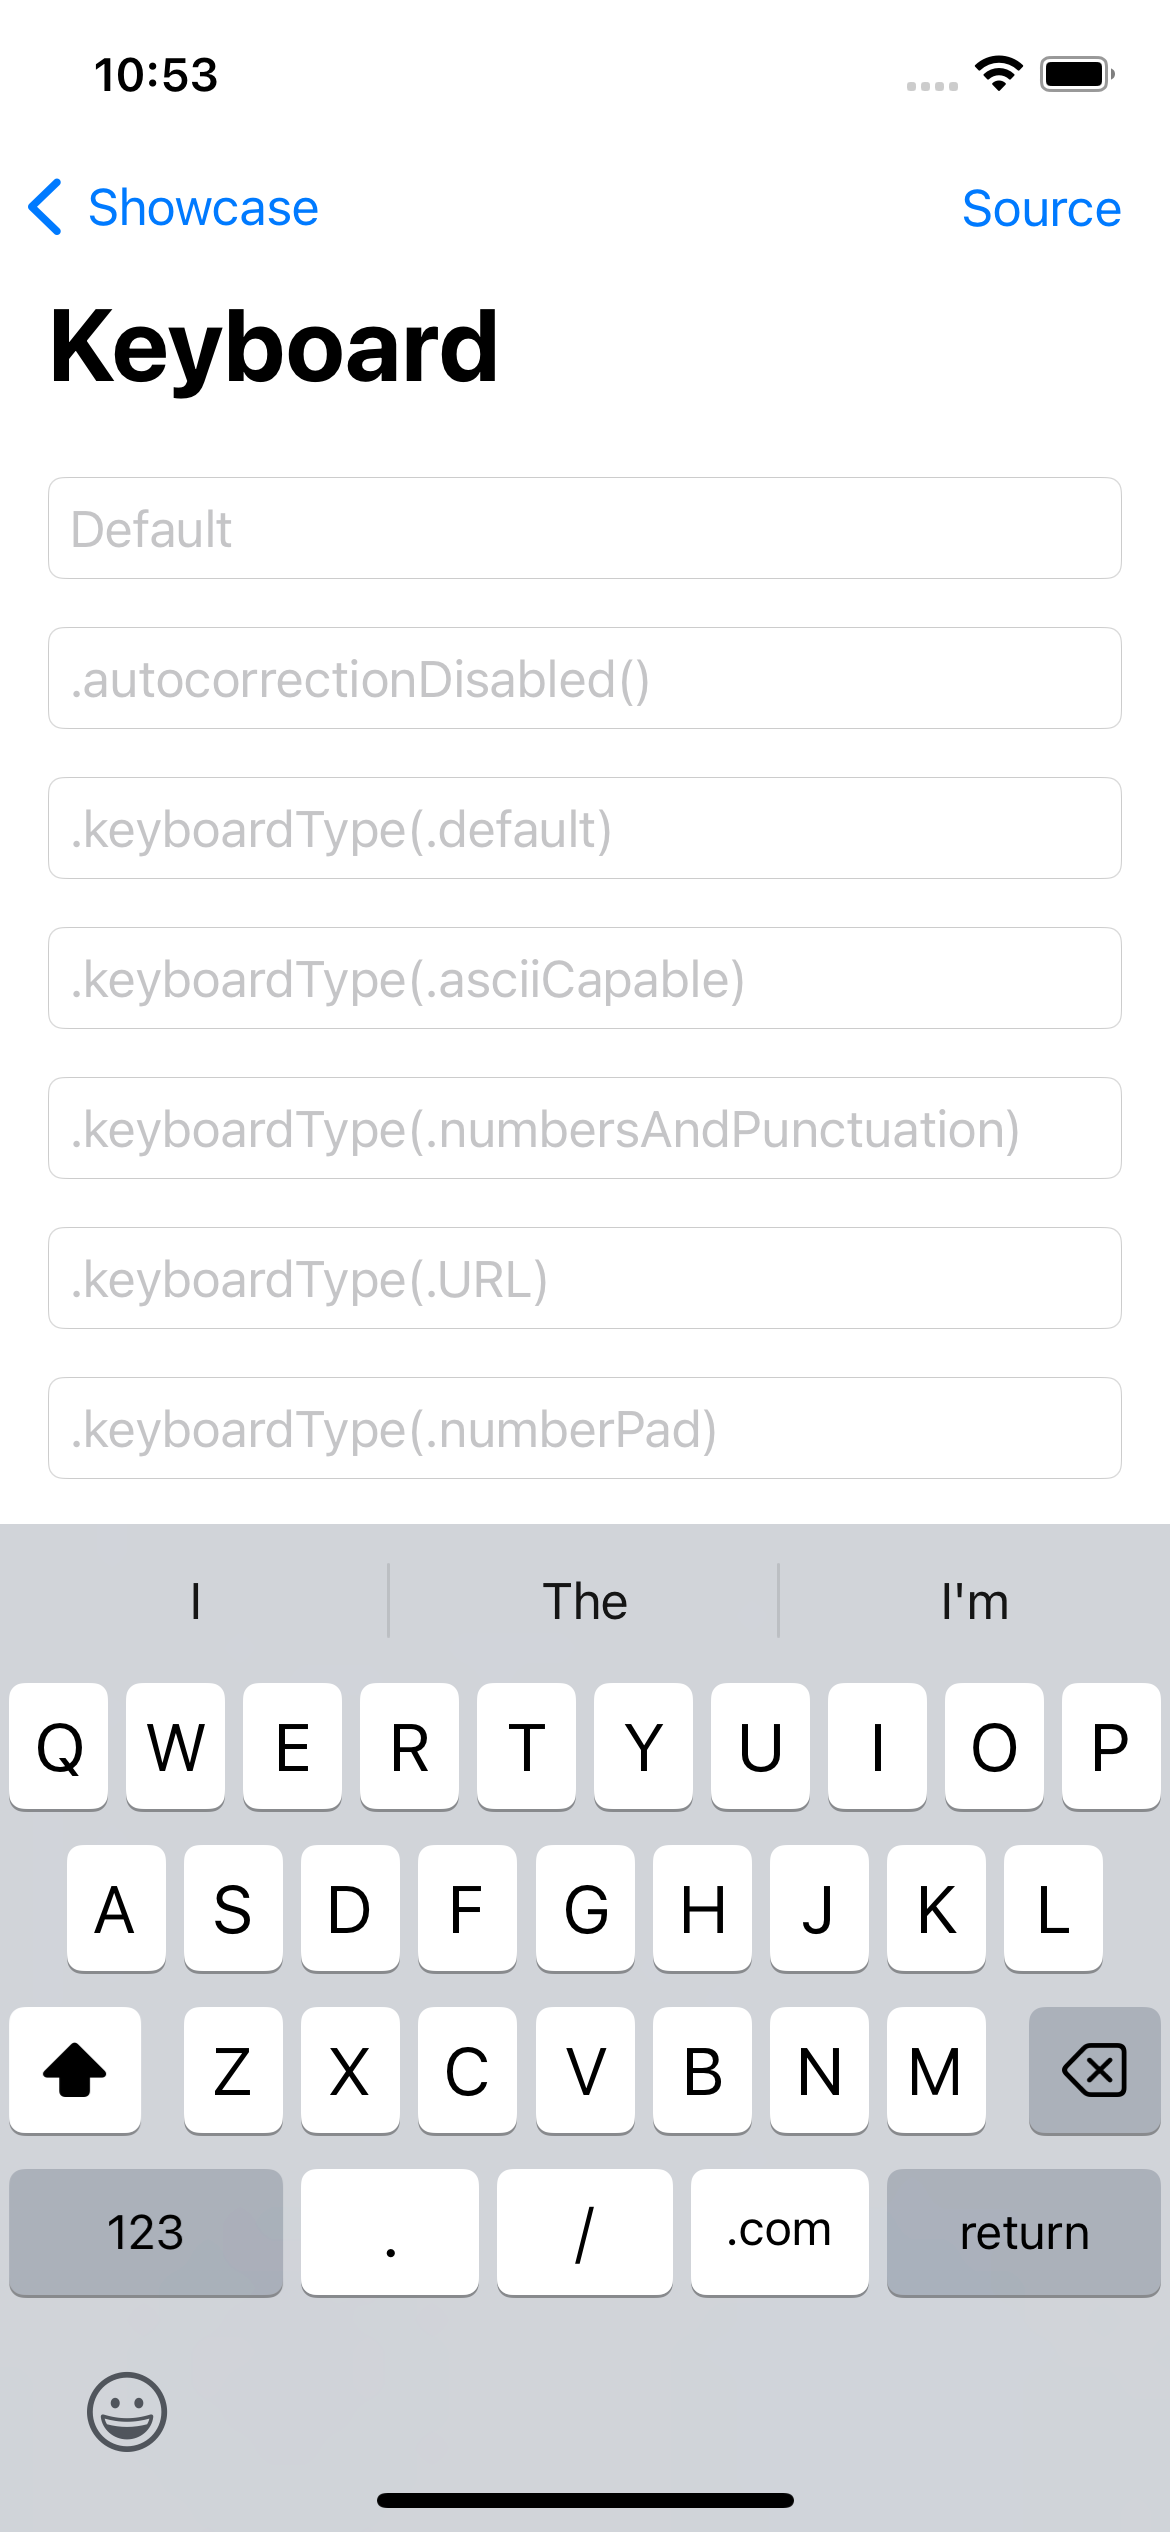 iPhone screenshot for Keyboard component (light mode)